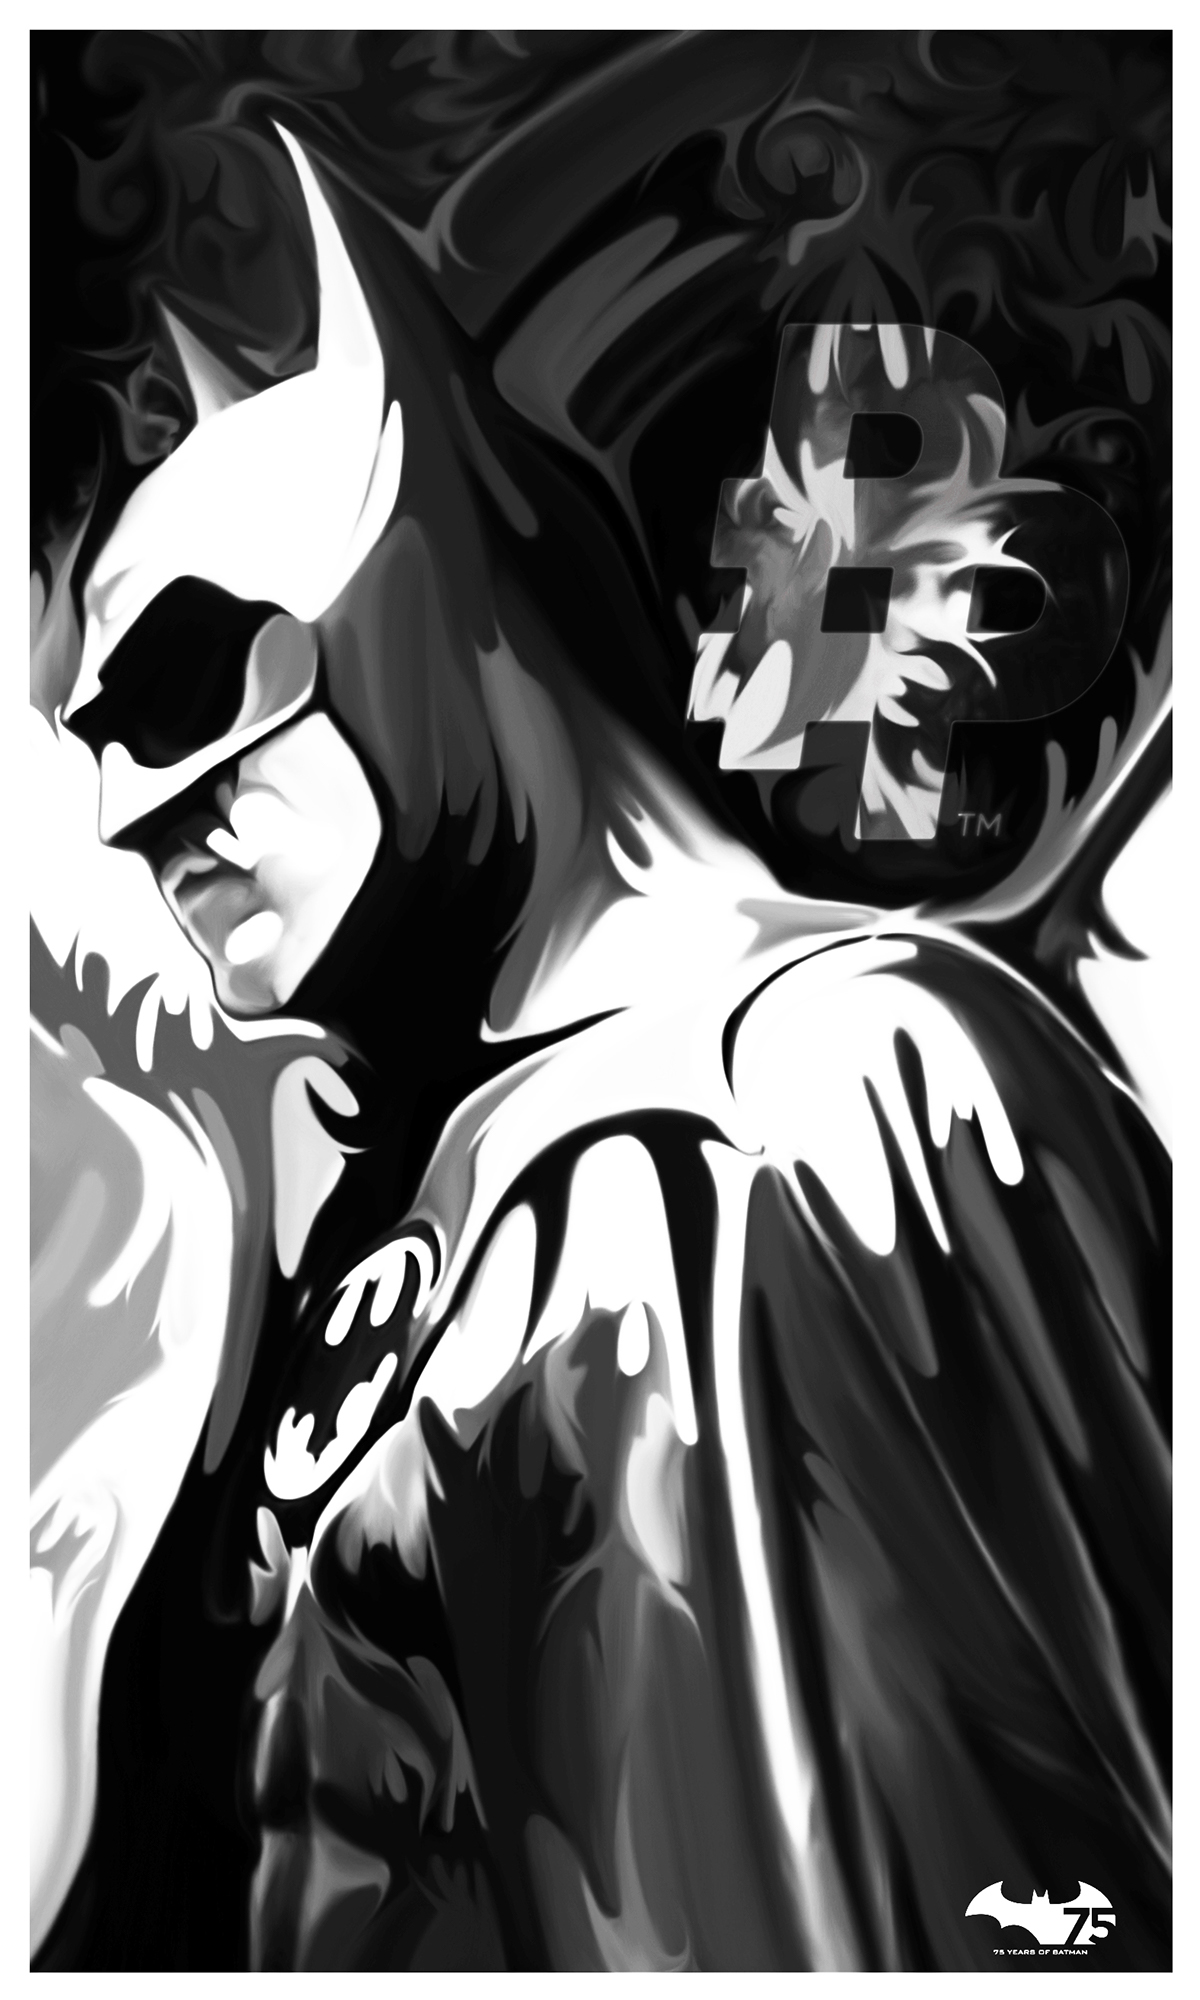 Poster Posse batman Michael Keaton Dc Comics blurppy